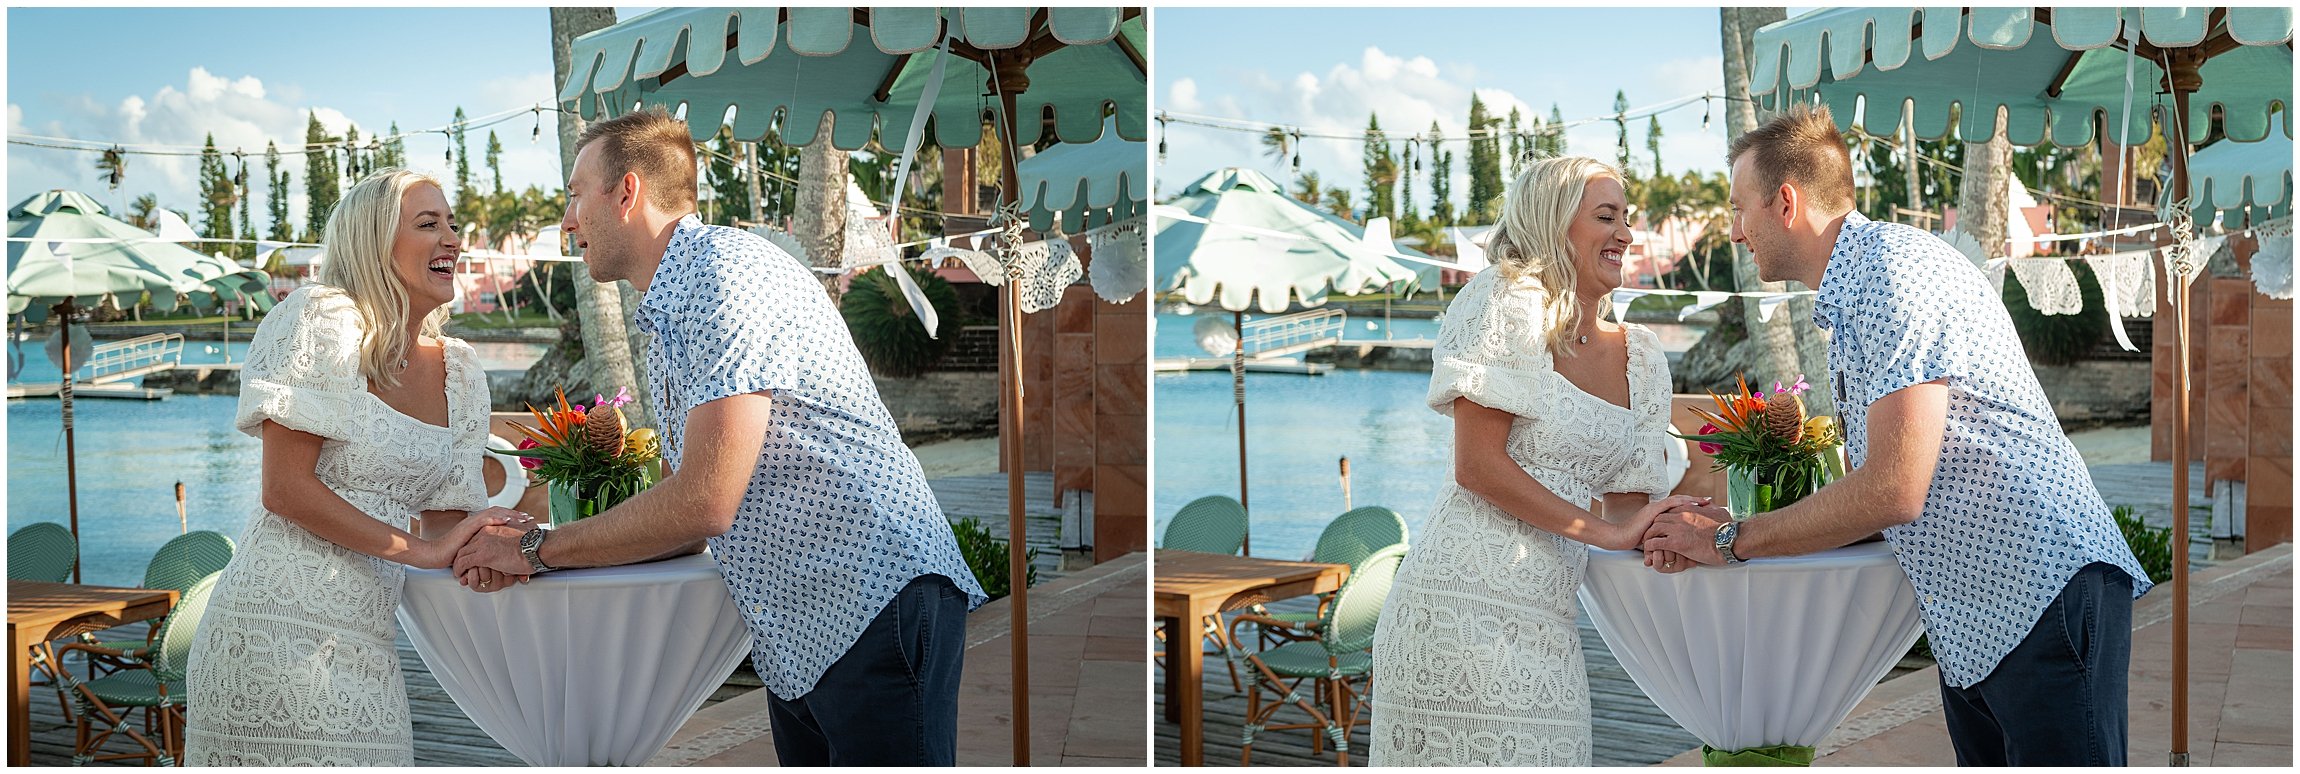 Wedding Photographer Bermuda_Cambridge Beaches Resort_©FianderFoto_012.jpg